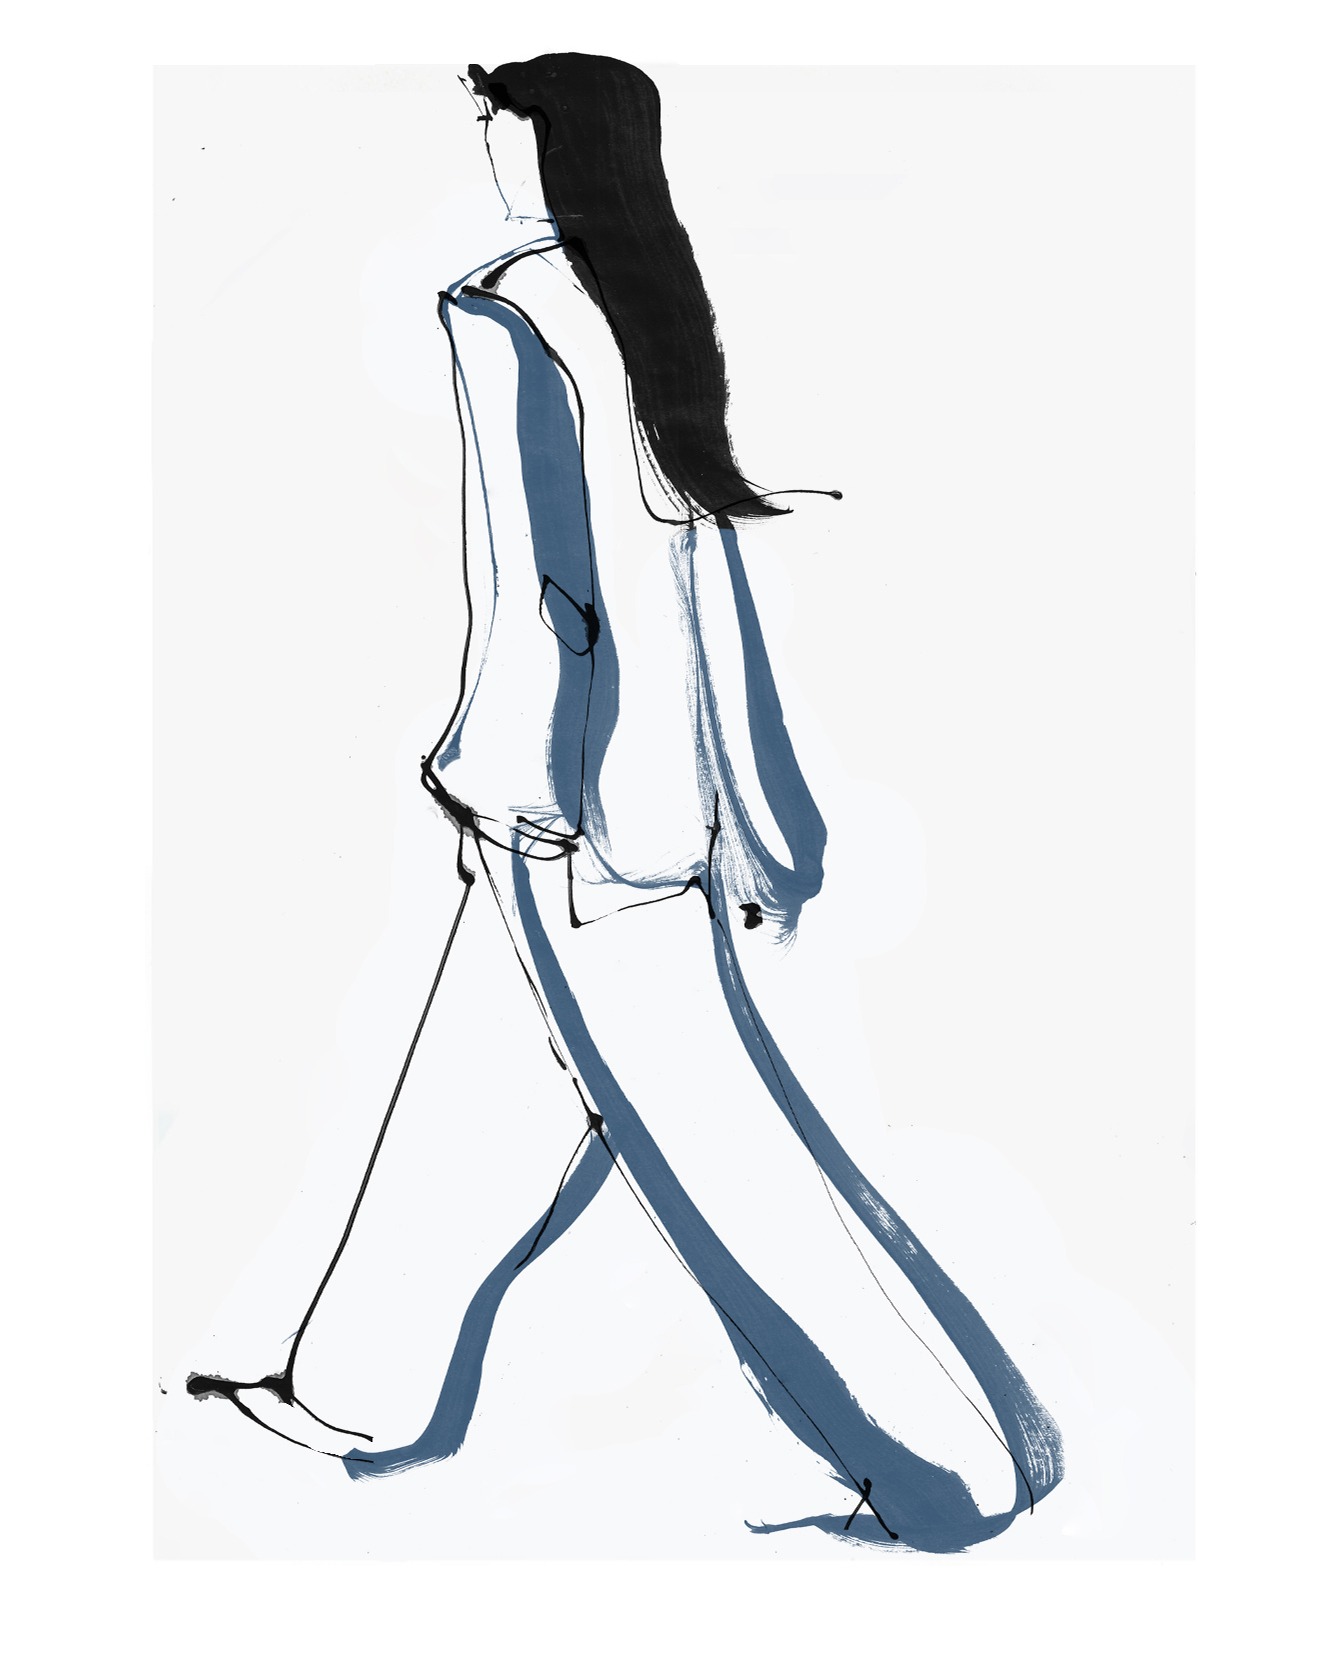 Fashion illustration hand drawn in ink. Woman drawing. Woman walking catwalk fashion illustration. Fashion drawing woman on a catwalk